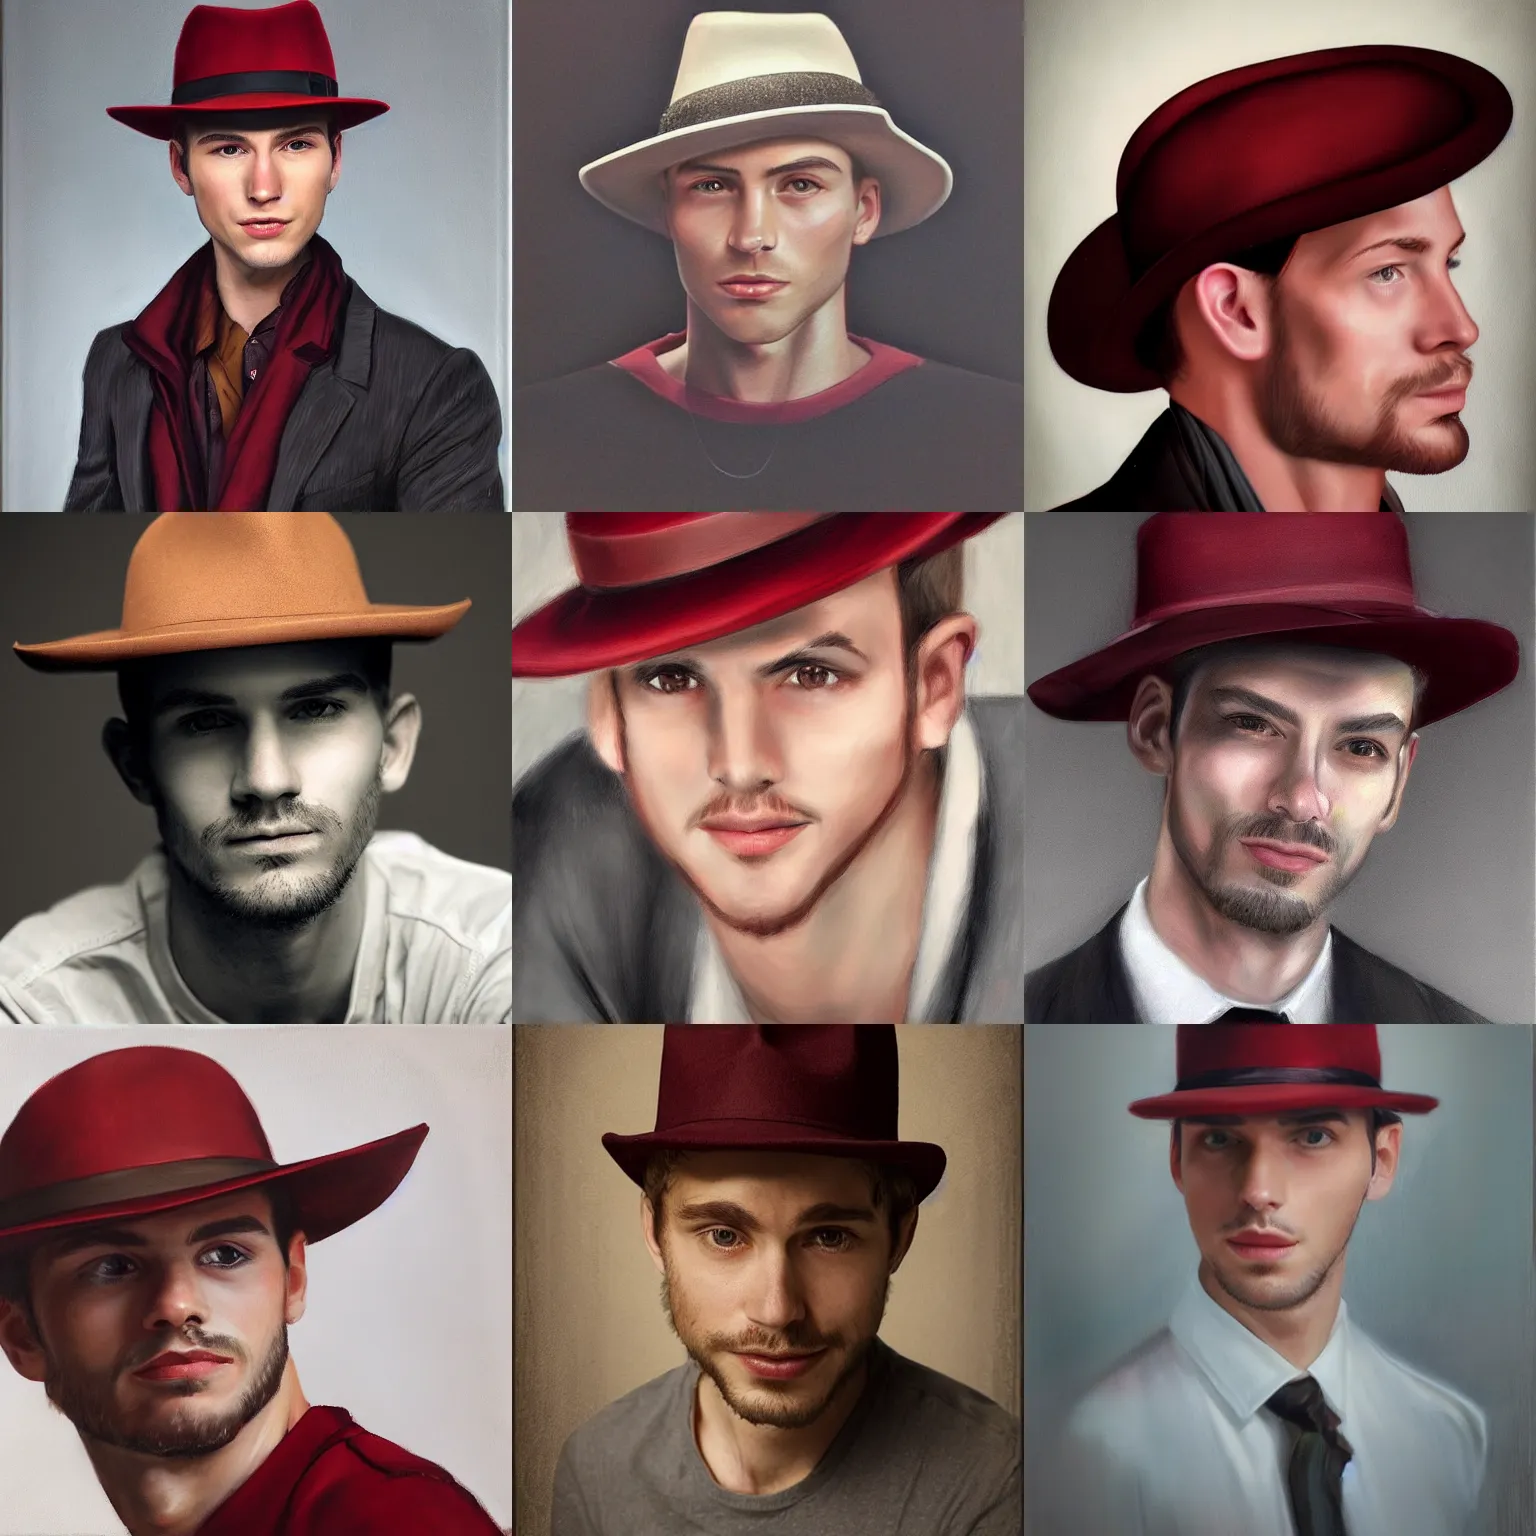 Prompt: hyperrealistic portrait young man ethan hawk dark red fedora hat smirk